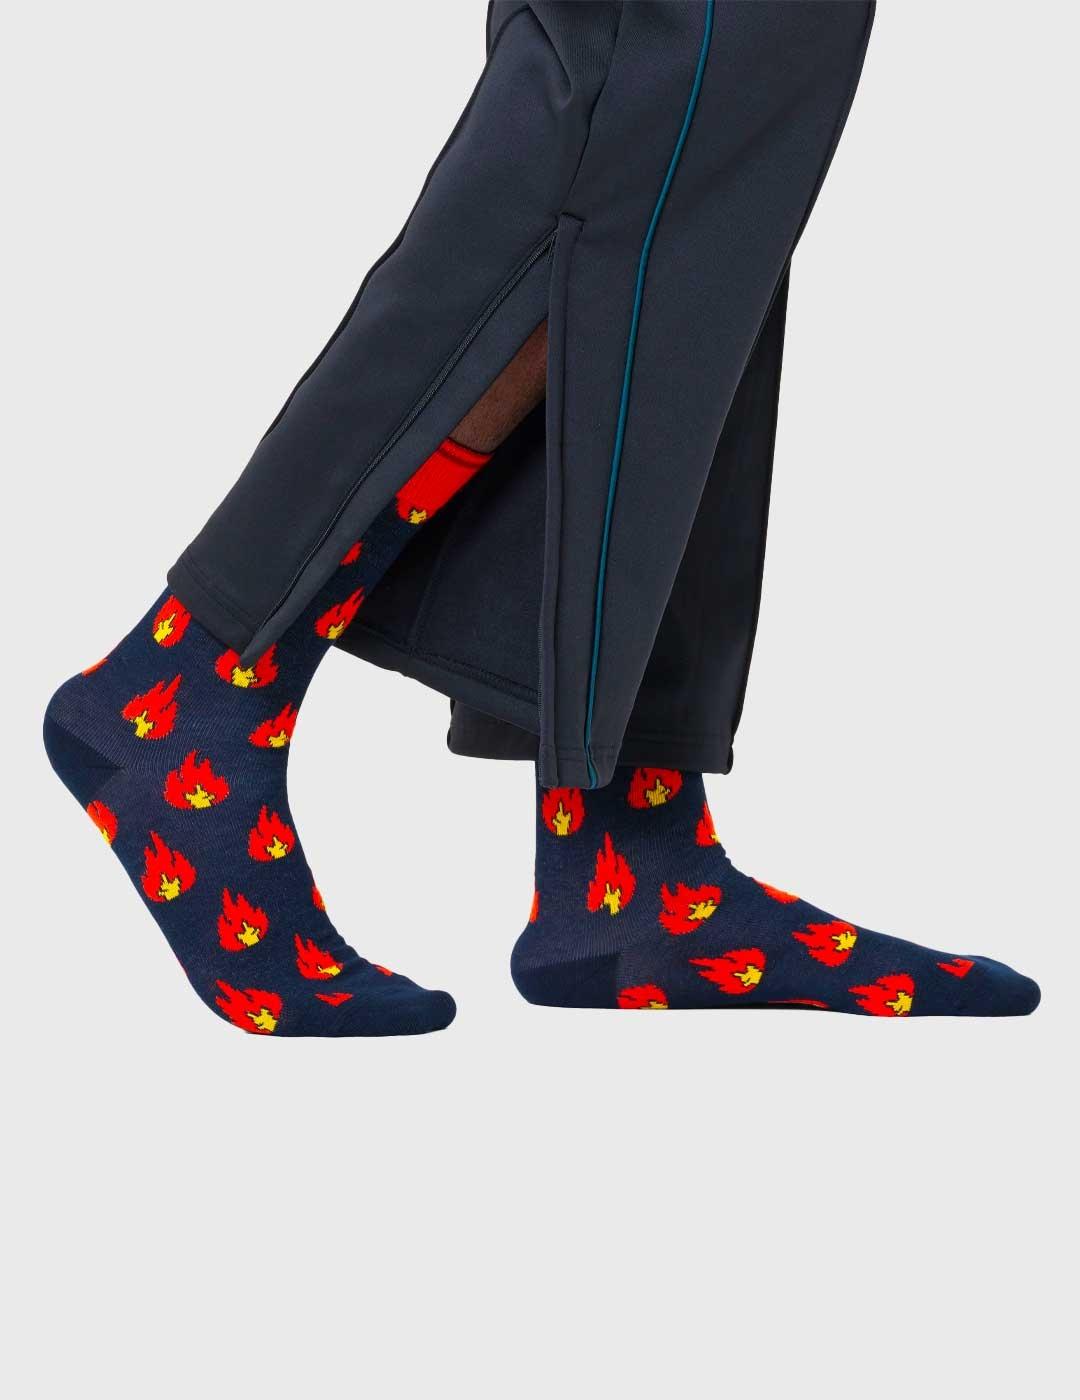 Calcetines Happy Socks Flames marino unisex